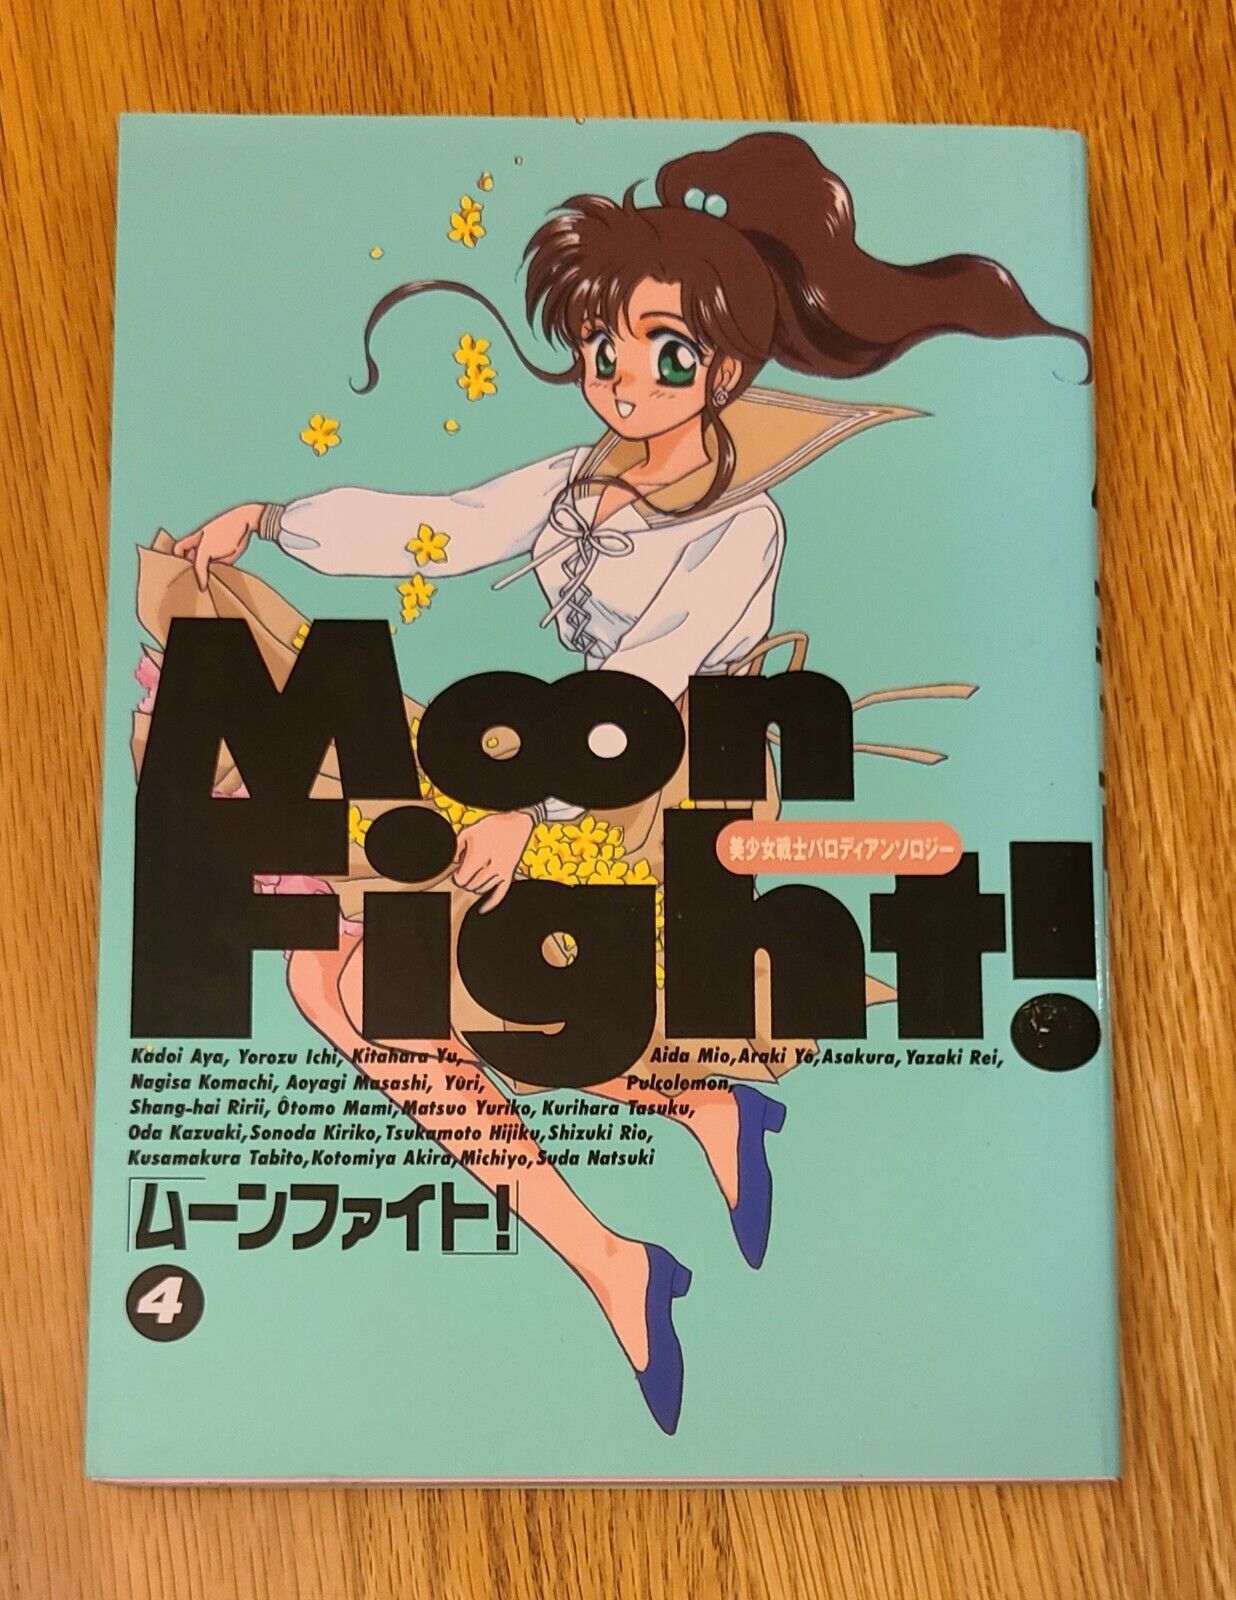 Sailor Moon Moon Fight Vol. 4 Doujinshi 1993 Japanese Manga